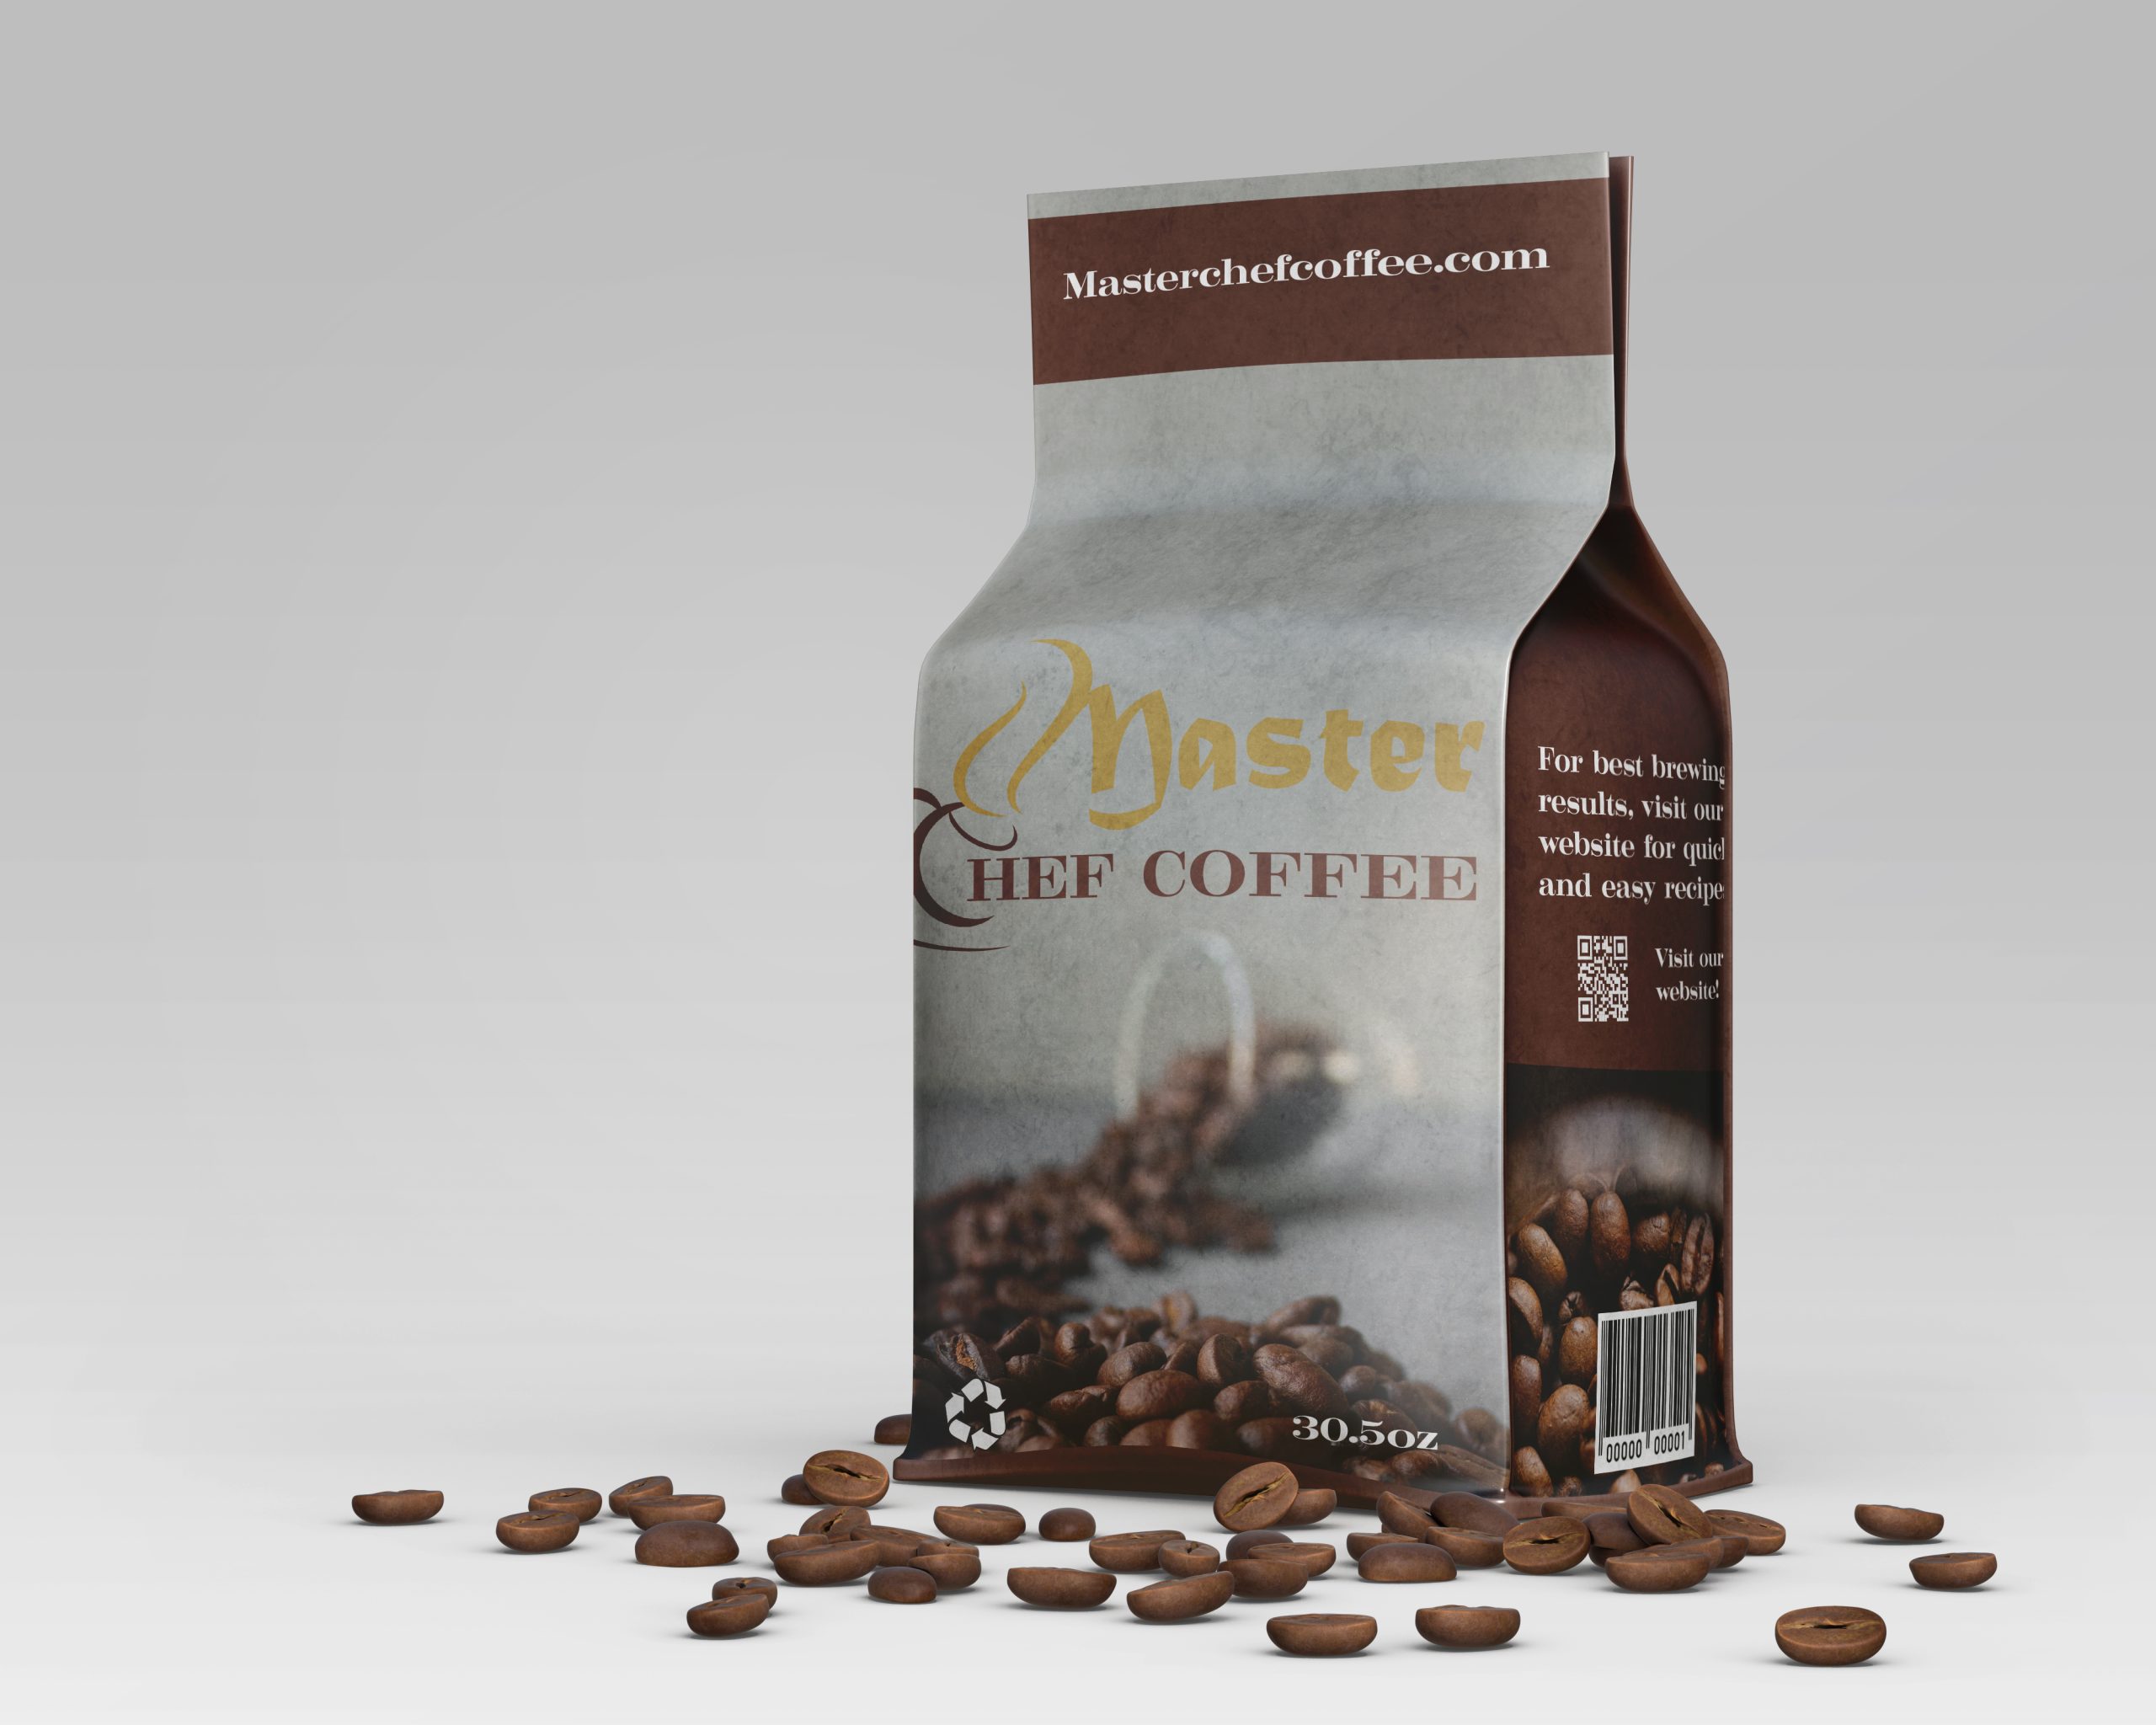 An alternative idea for masterchef coffee brand